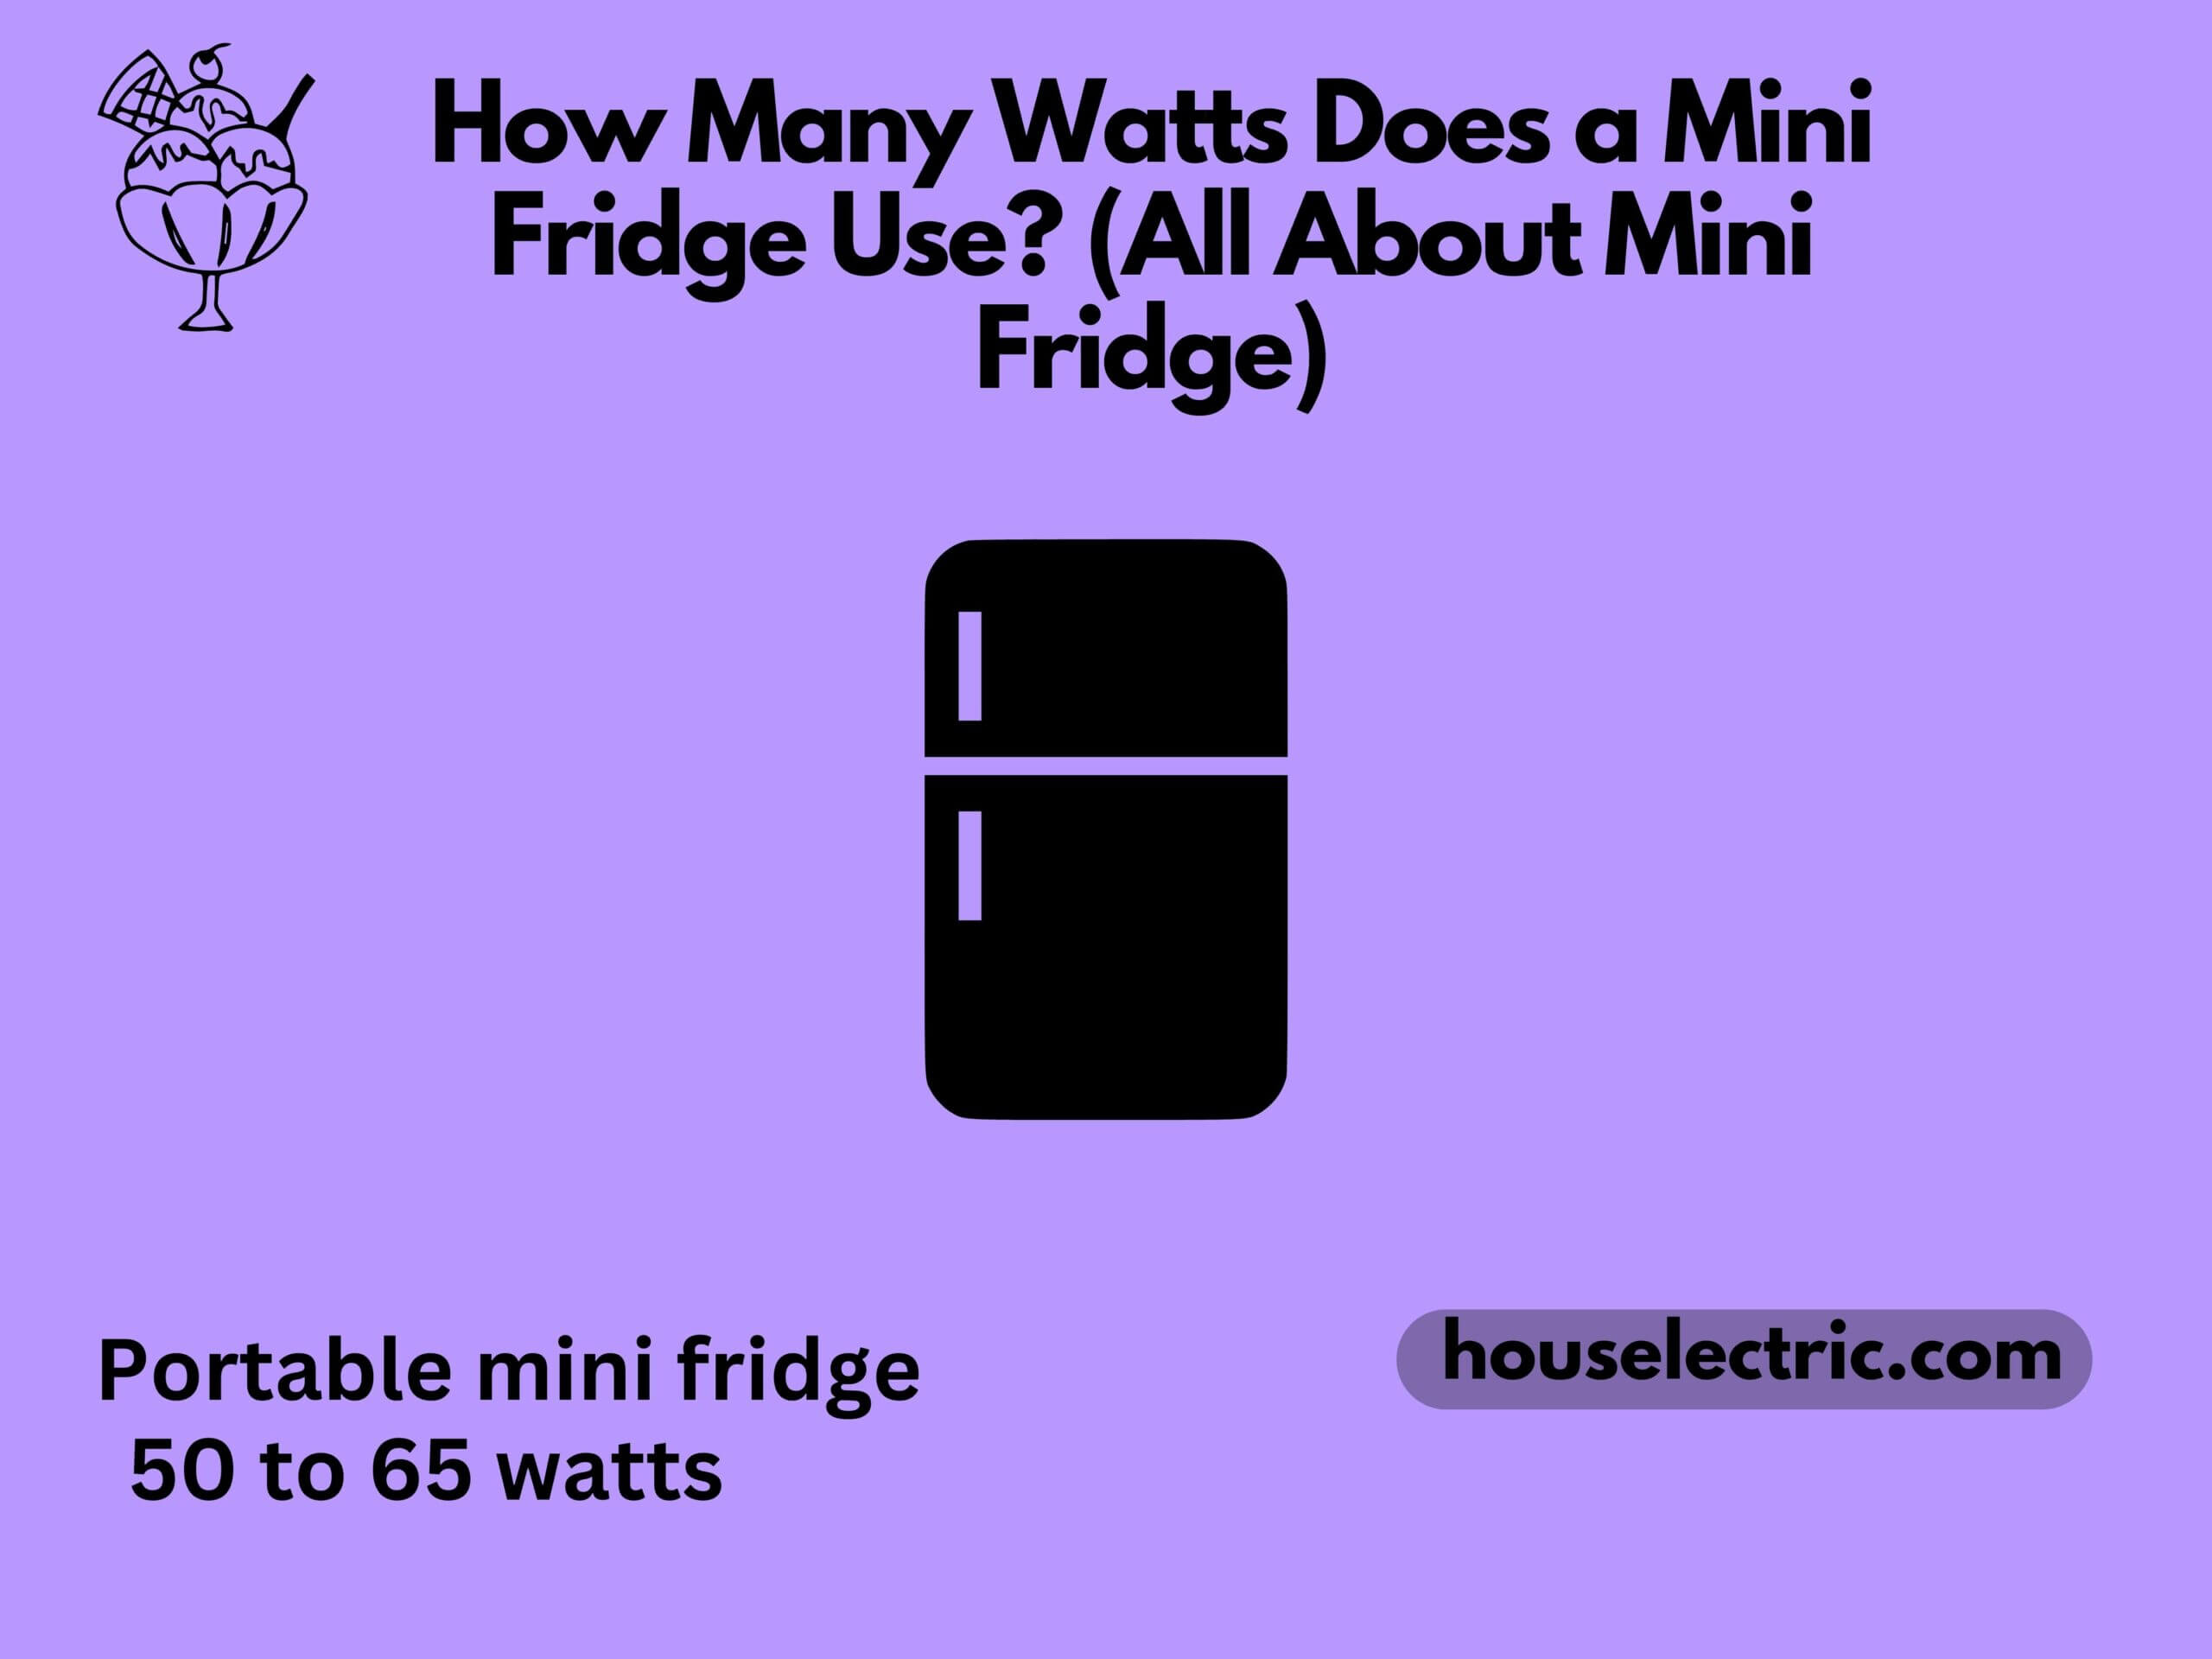 watts does a mini fridge use